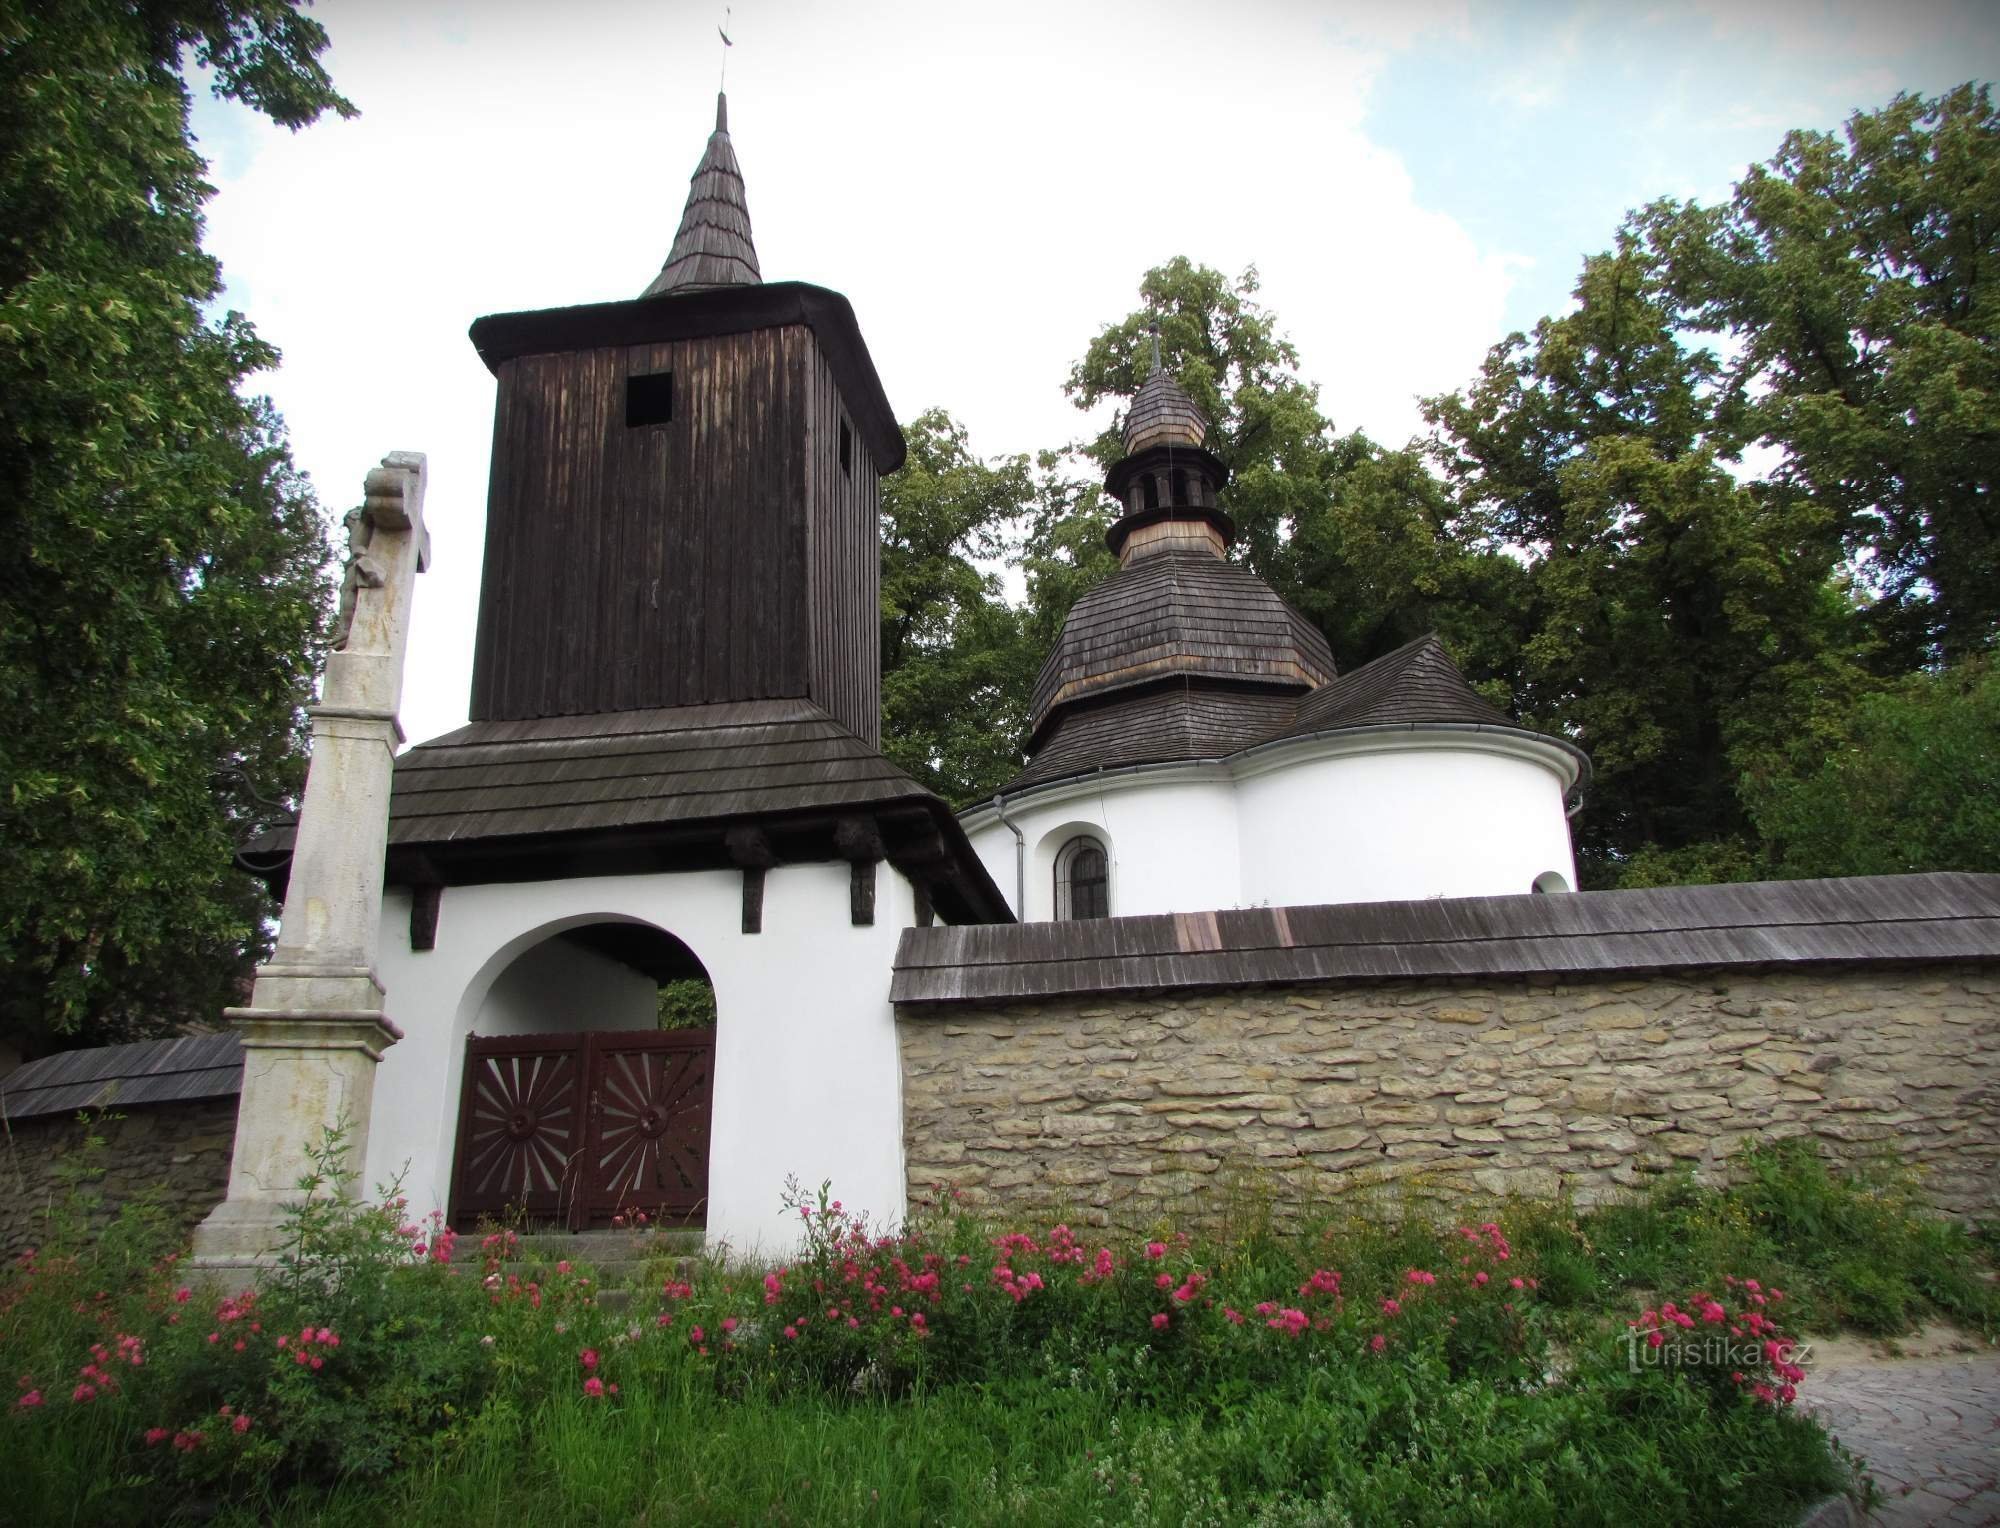 Česká Třebová - найбільш пам'ятна сакральна споруда